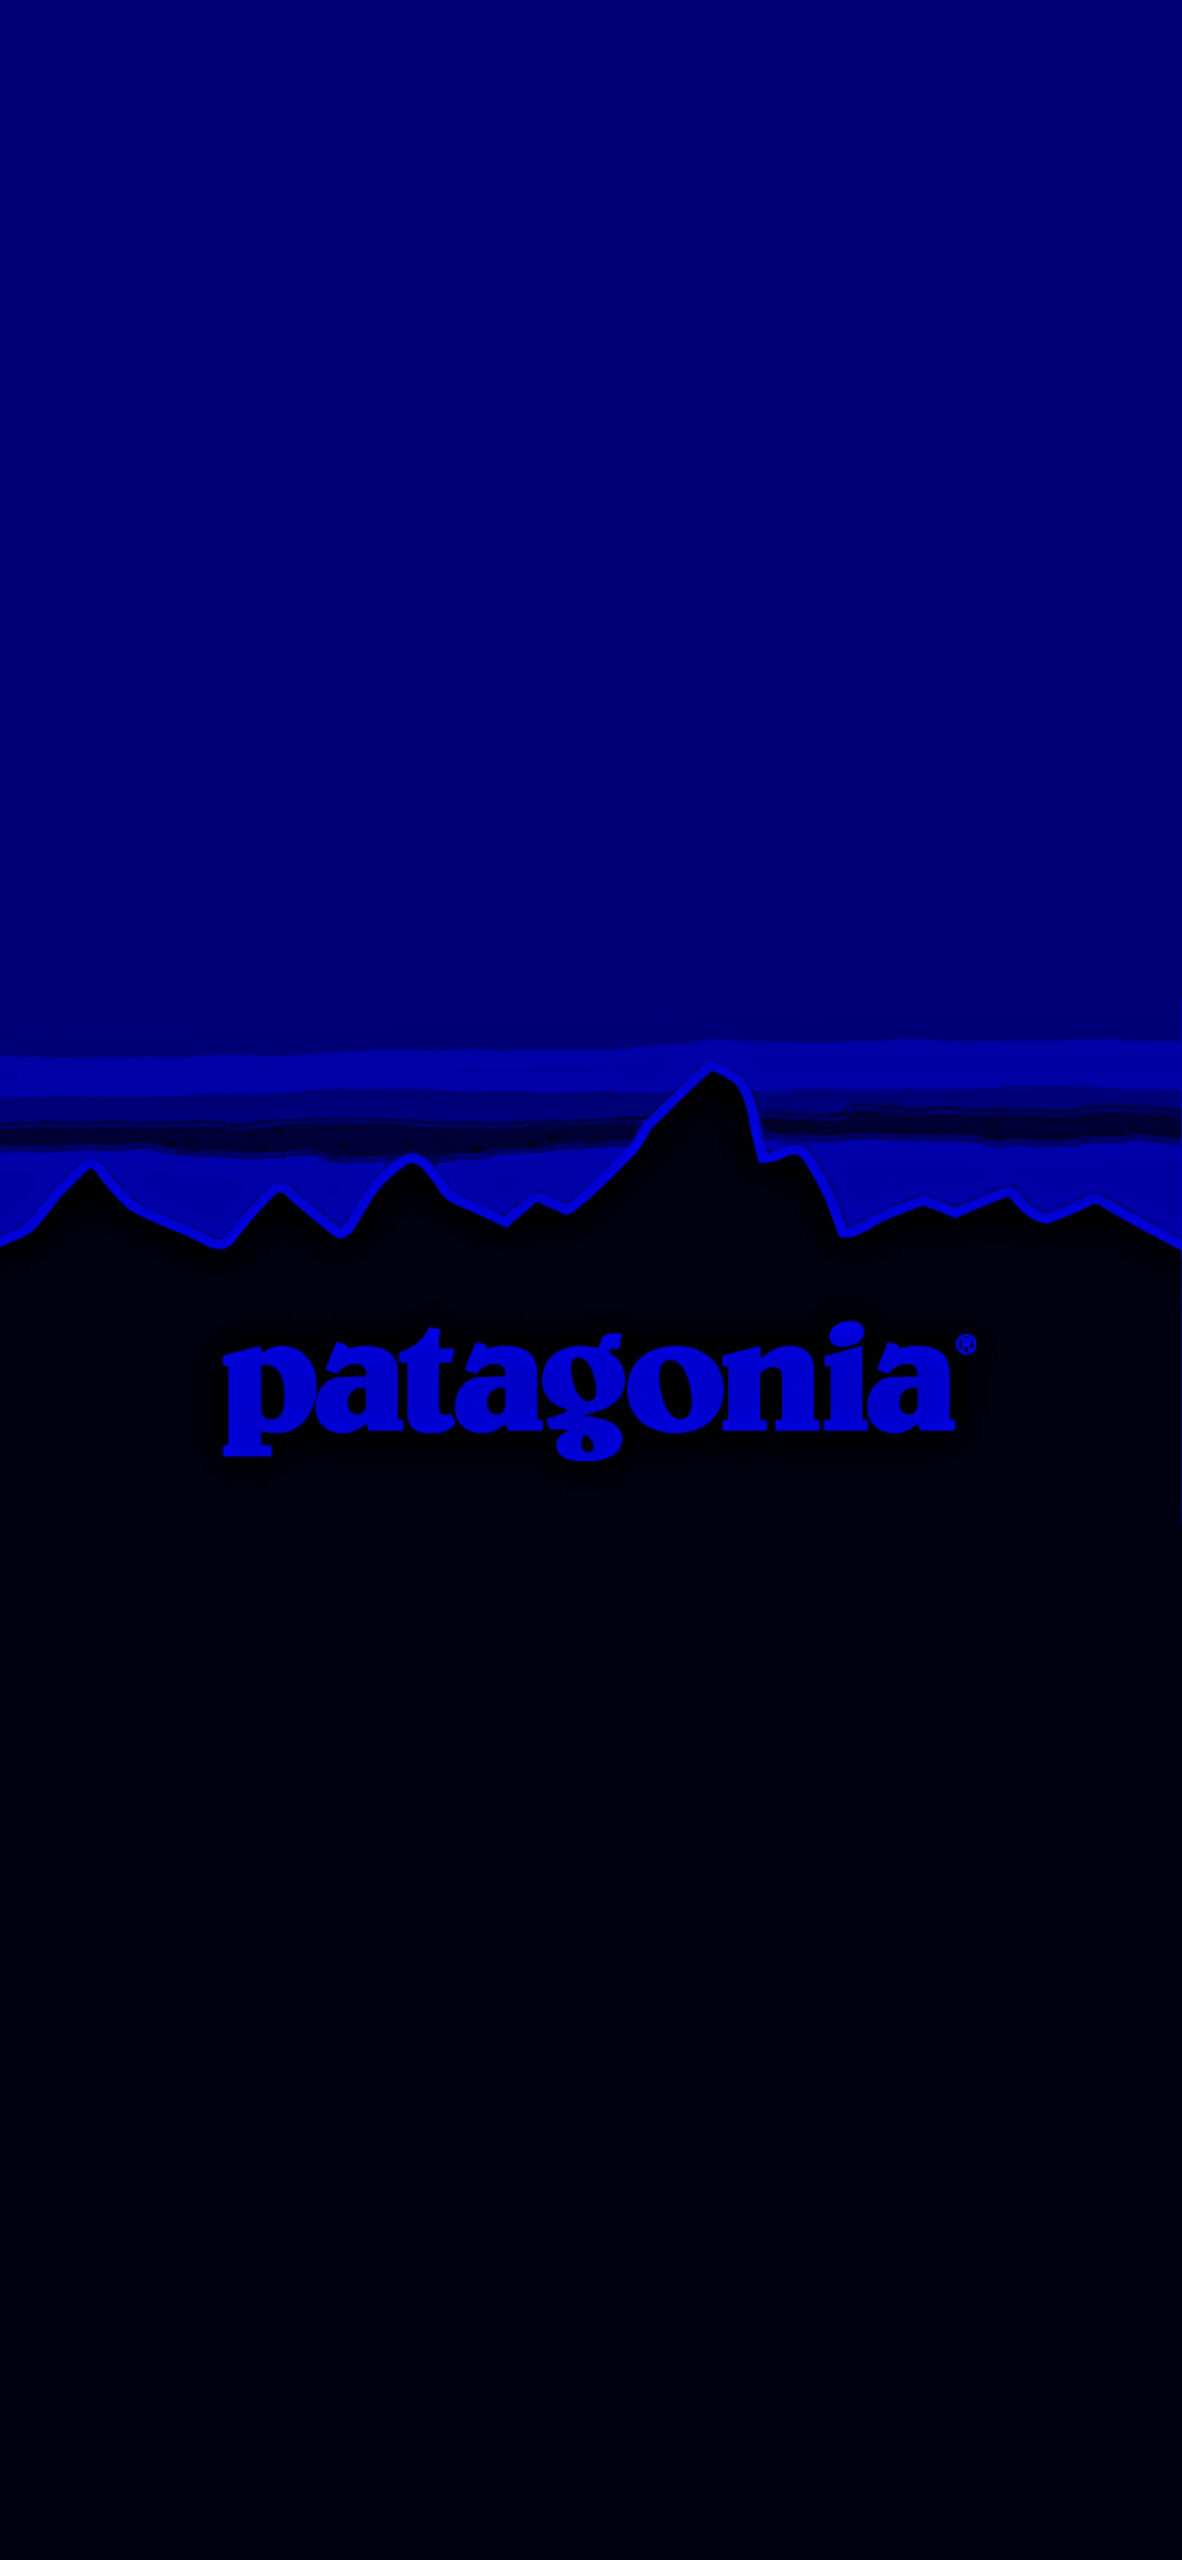 Patagonia パタゴニアの無料高画質スマホ壁紙 エモい スマホ壁紙辞典